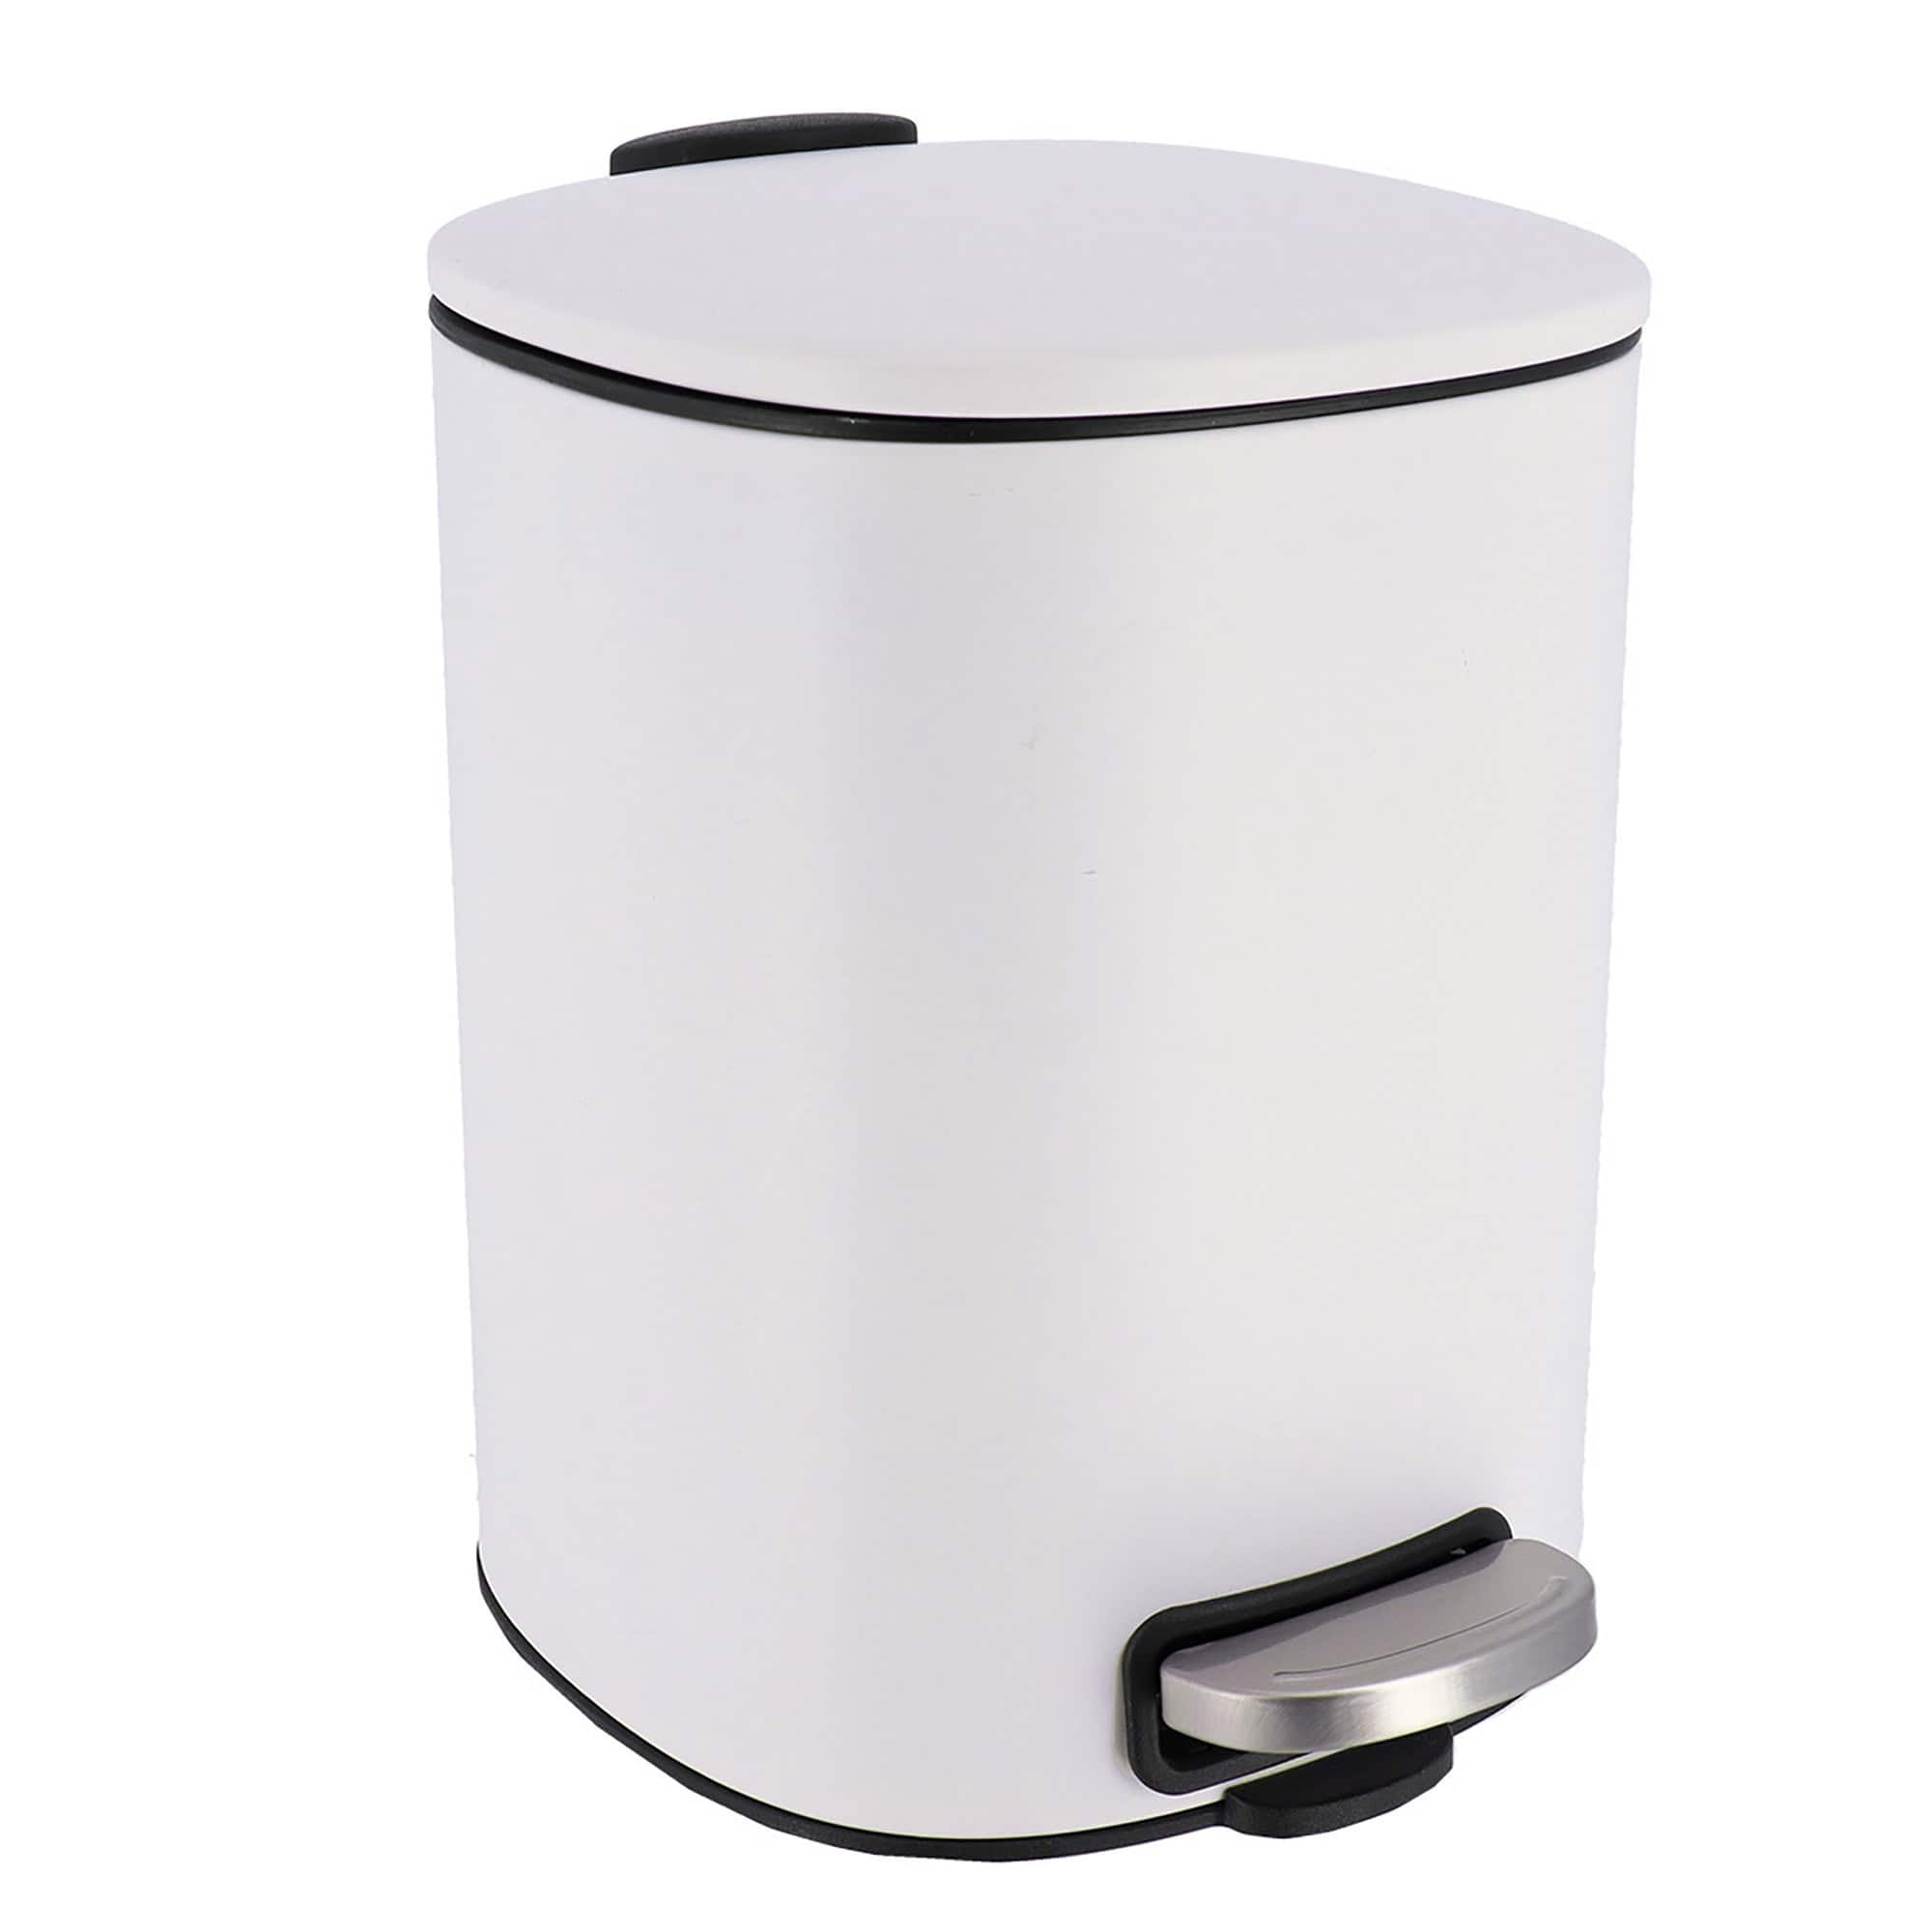 a white metal trash can, square design